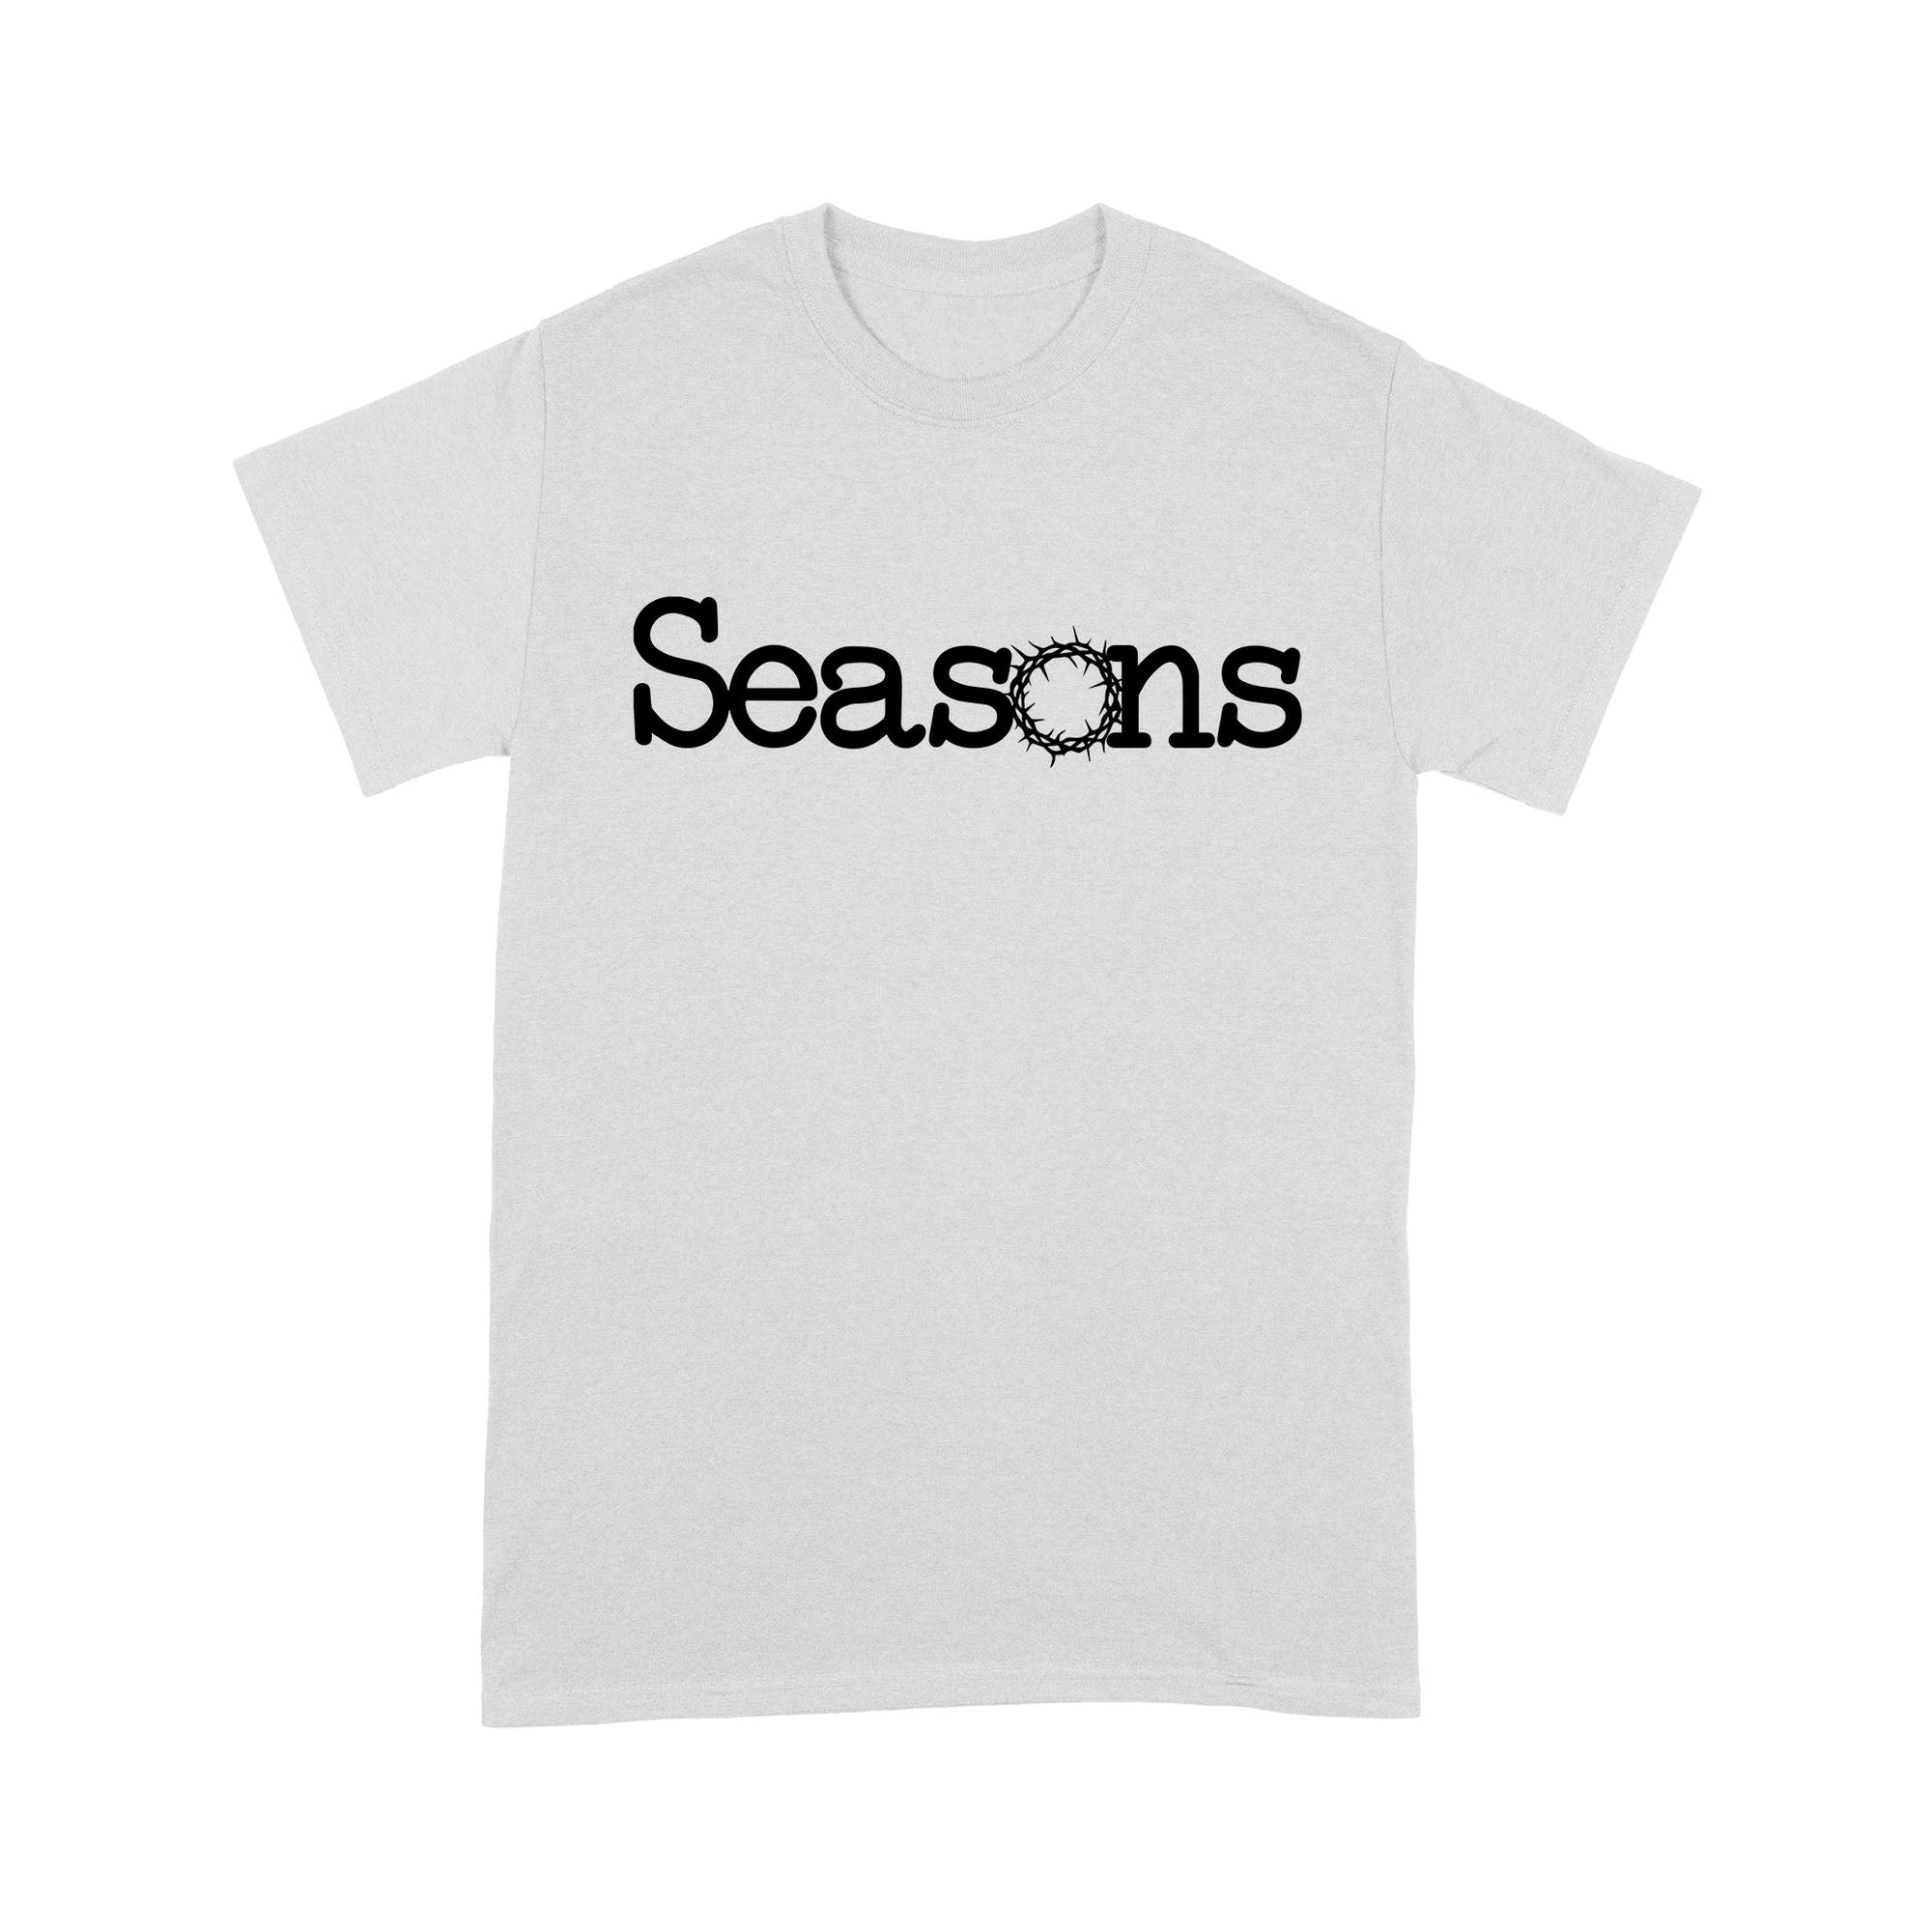 Seasons God Jesus - Standard T-Shirt